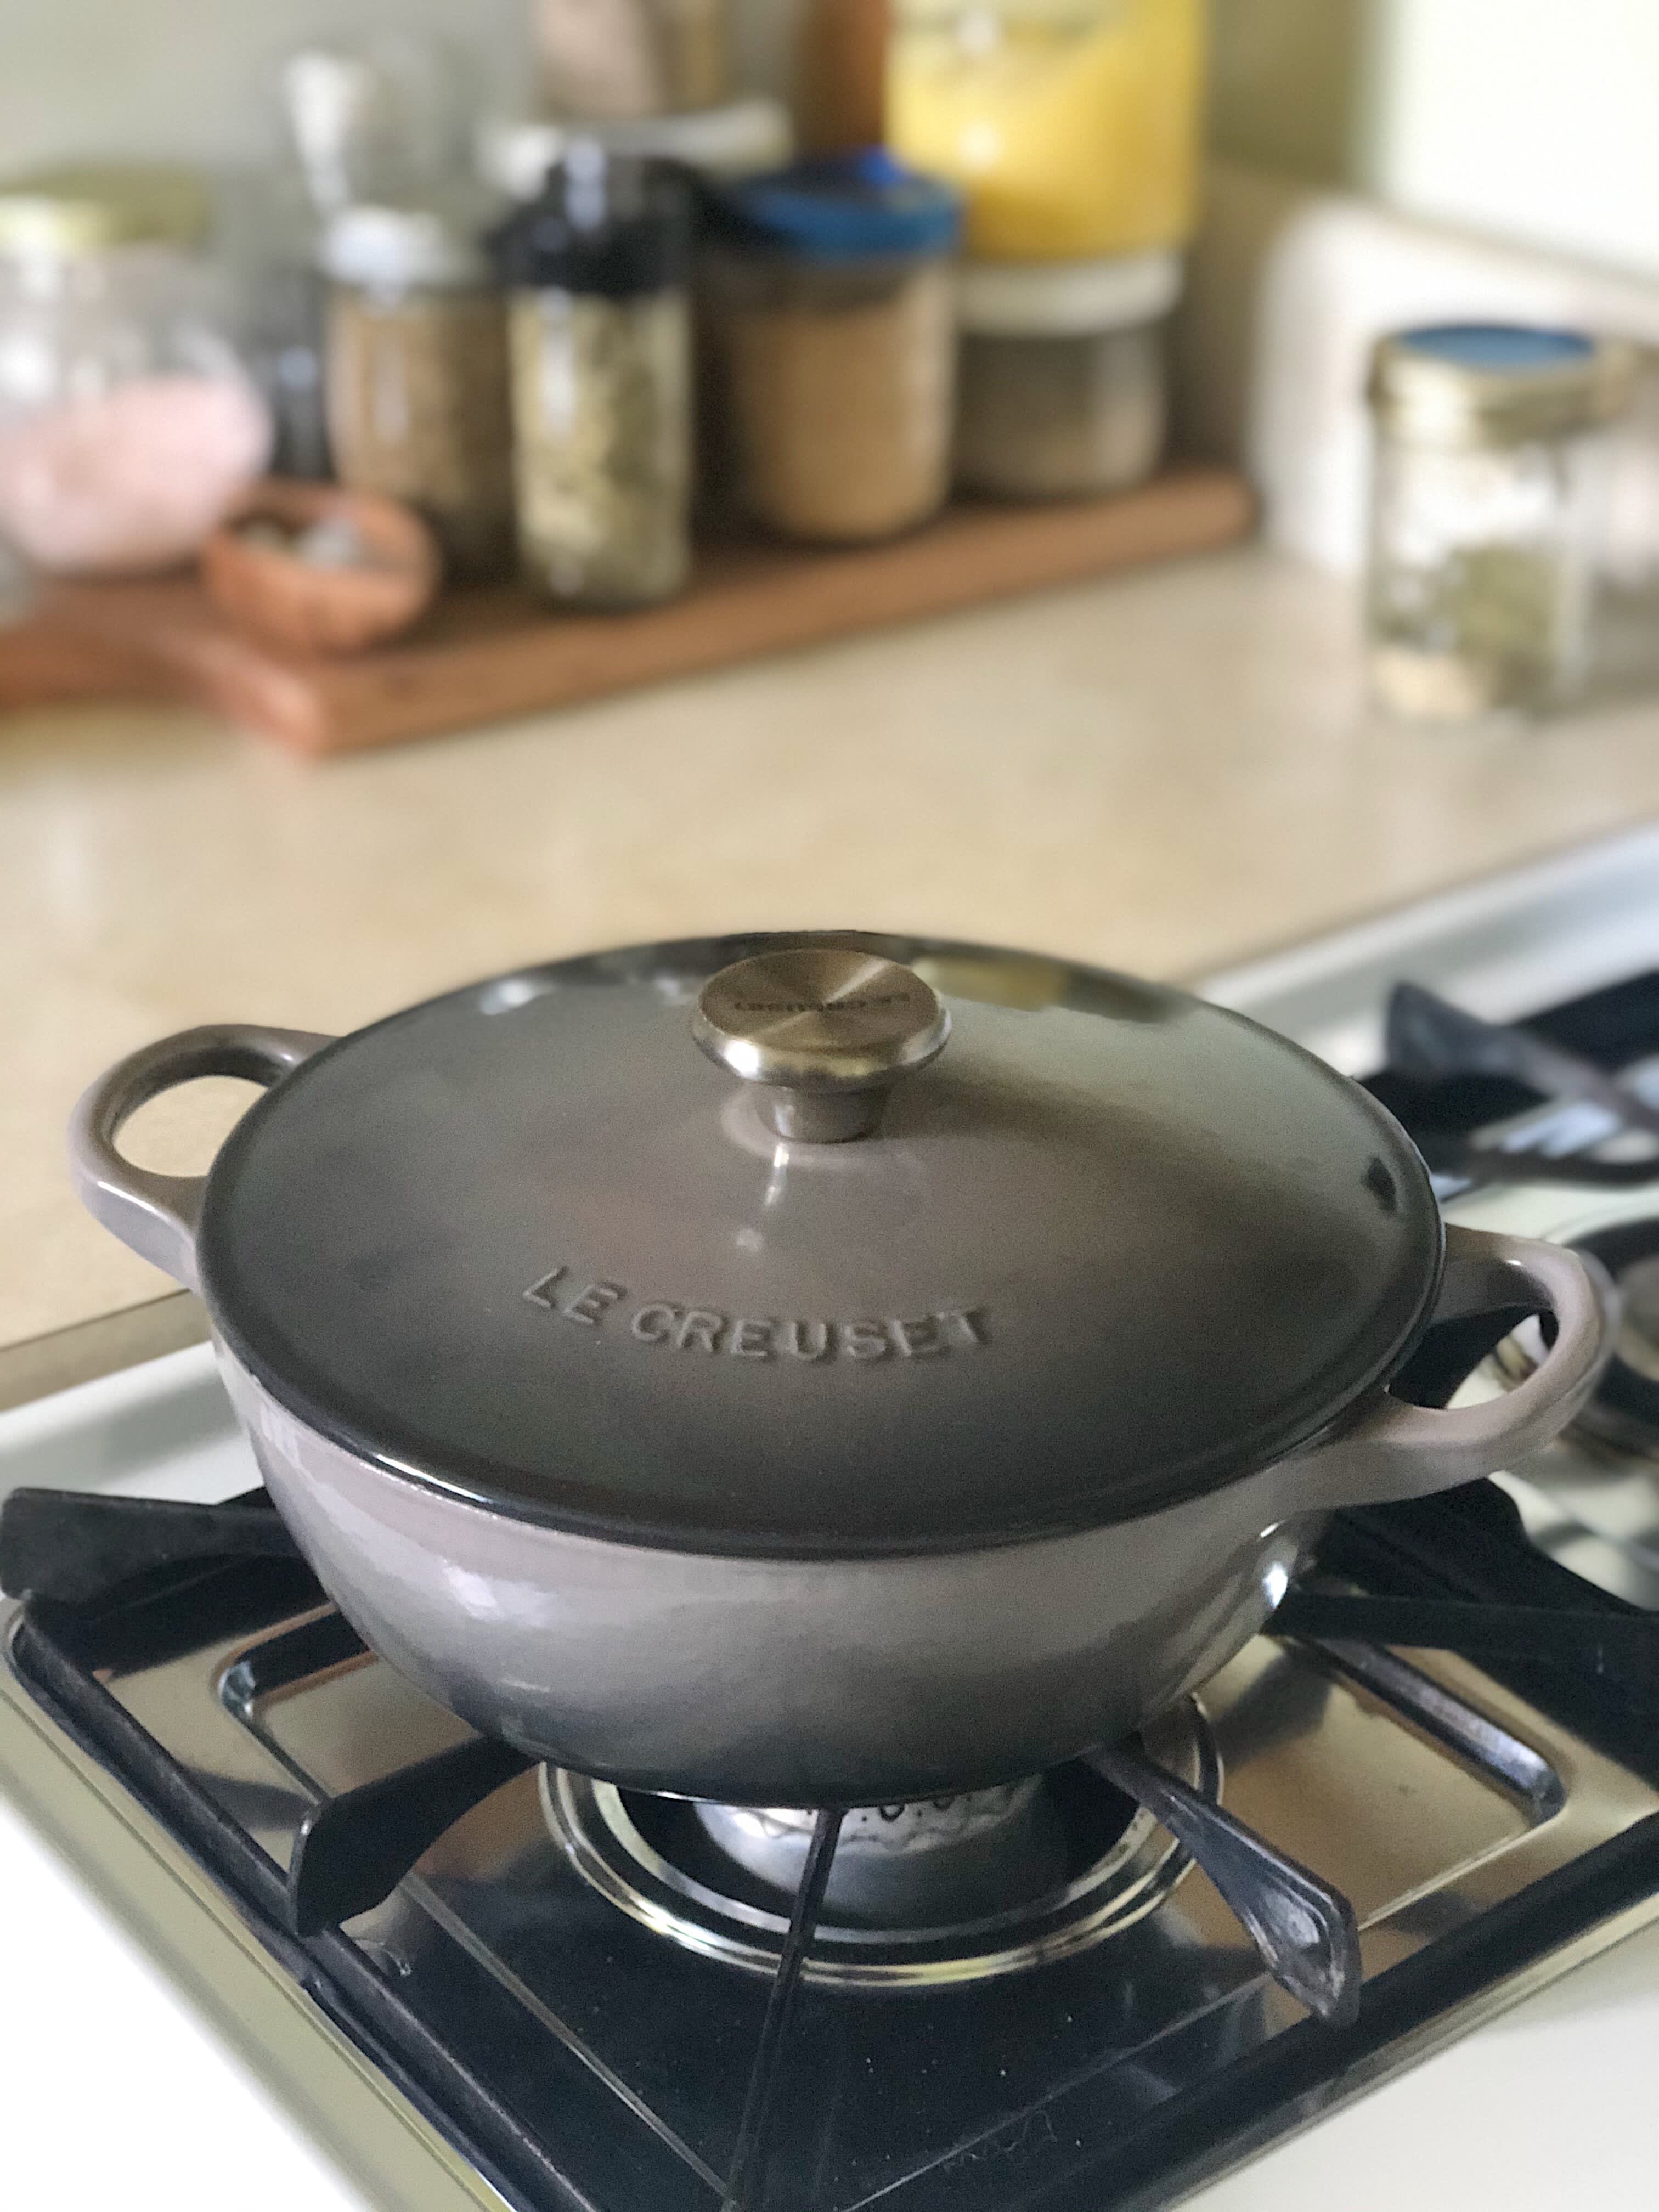 Signature Chef's Oven: One Pot, Year-round Versatility